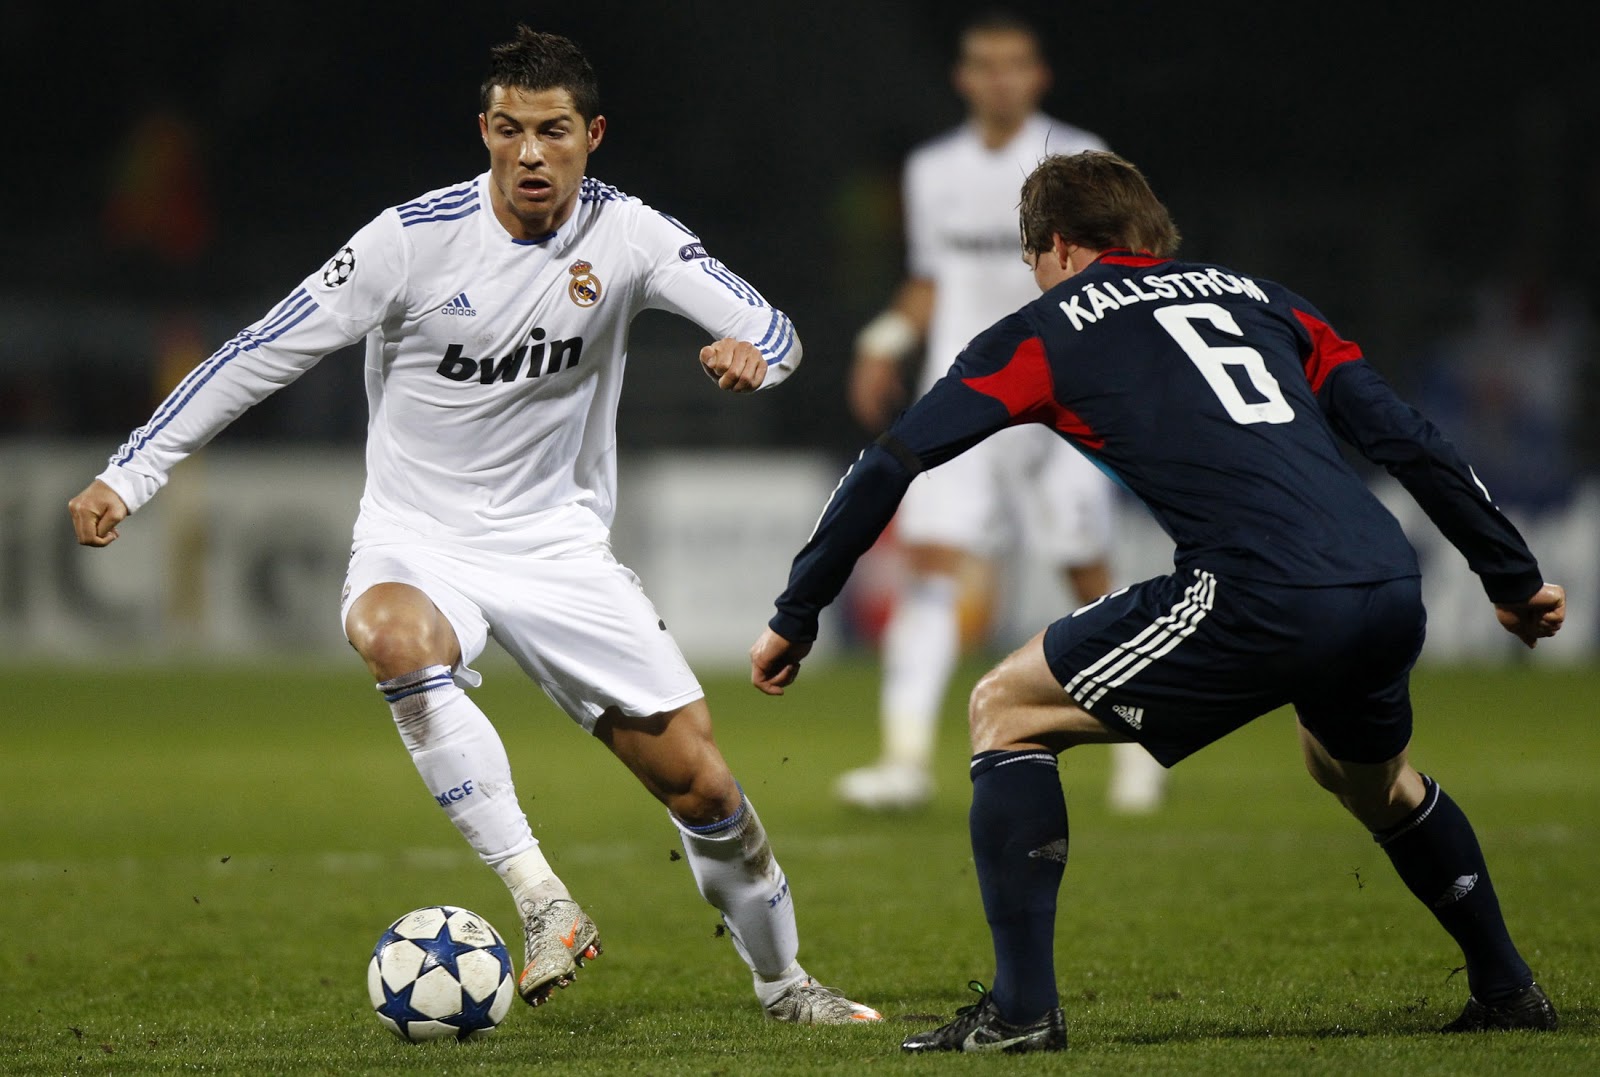 http://3.bp.blogspot.com/-trKfkPGNjJY/UItjKDCDv8I/AAAAAAAAAF8/m6GqbuCtLnA/s1600/Cristiano-Ronaldo-Lyon-Real-Madrid.jpg